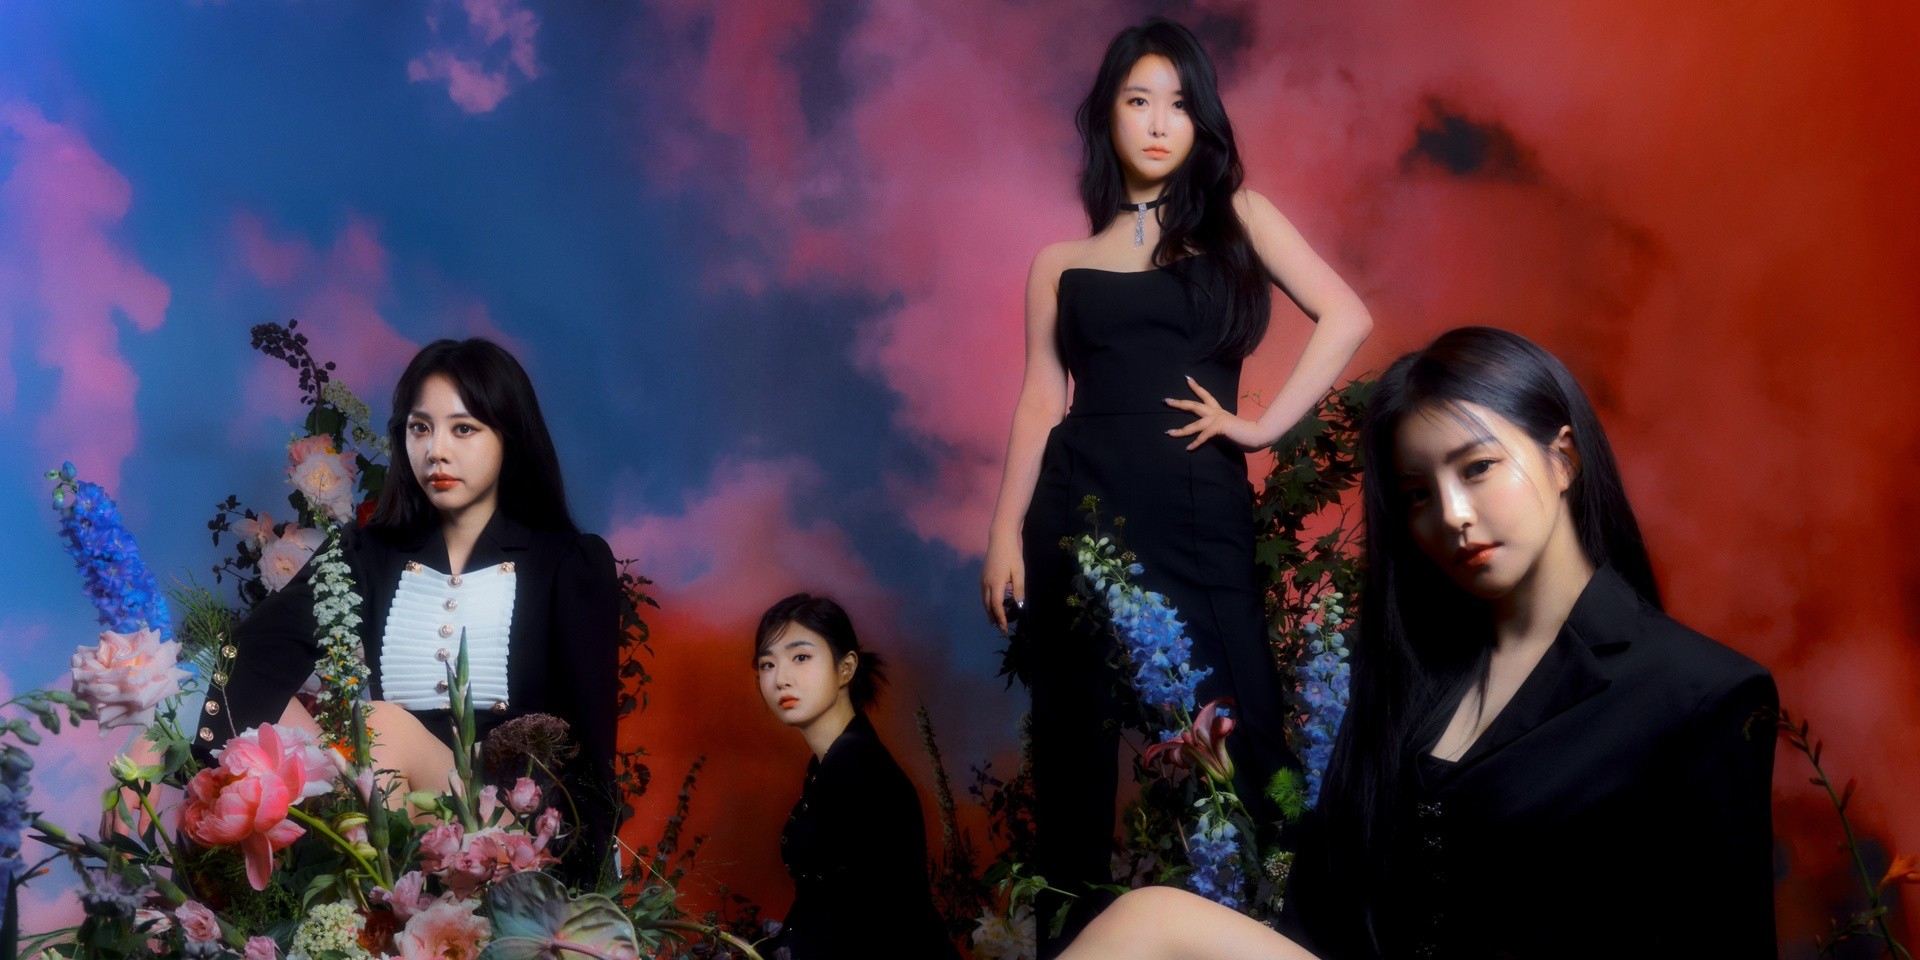 Brave Girls bring the sunshine with their fifth mini-album ‘Summer Queen’ - listen